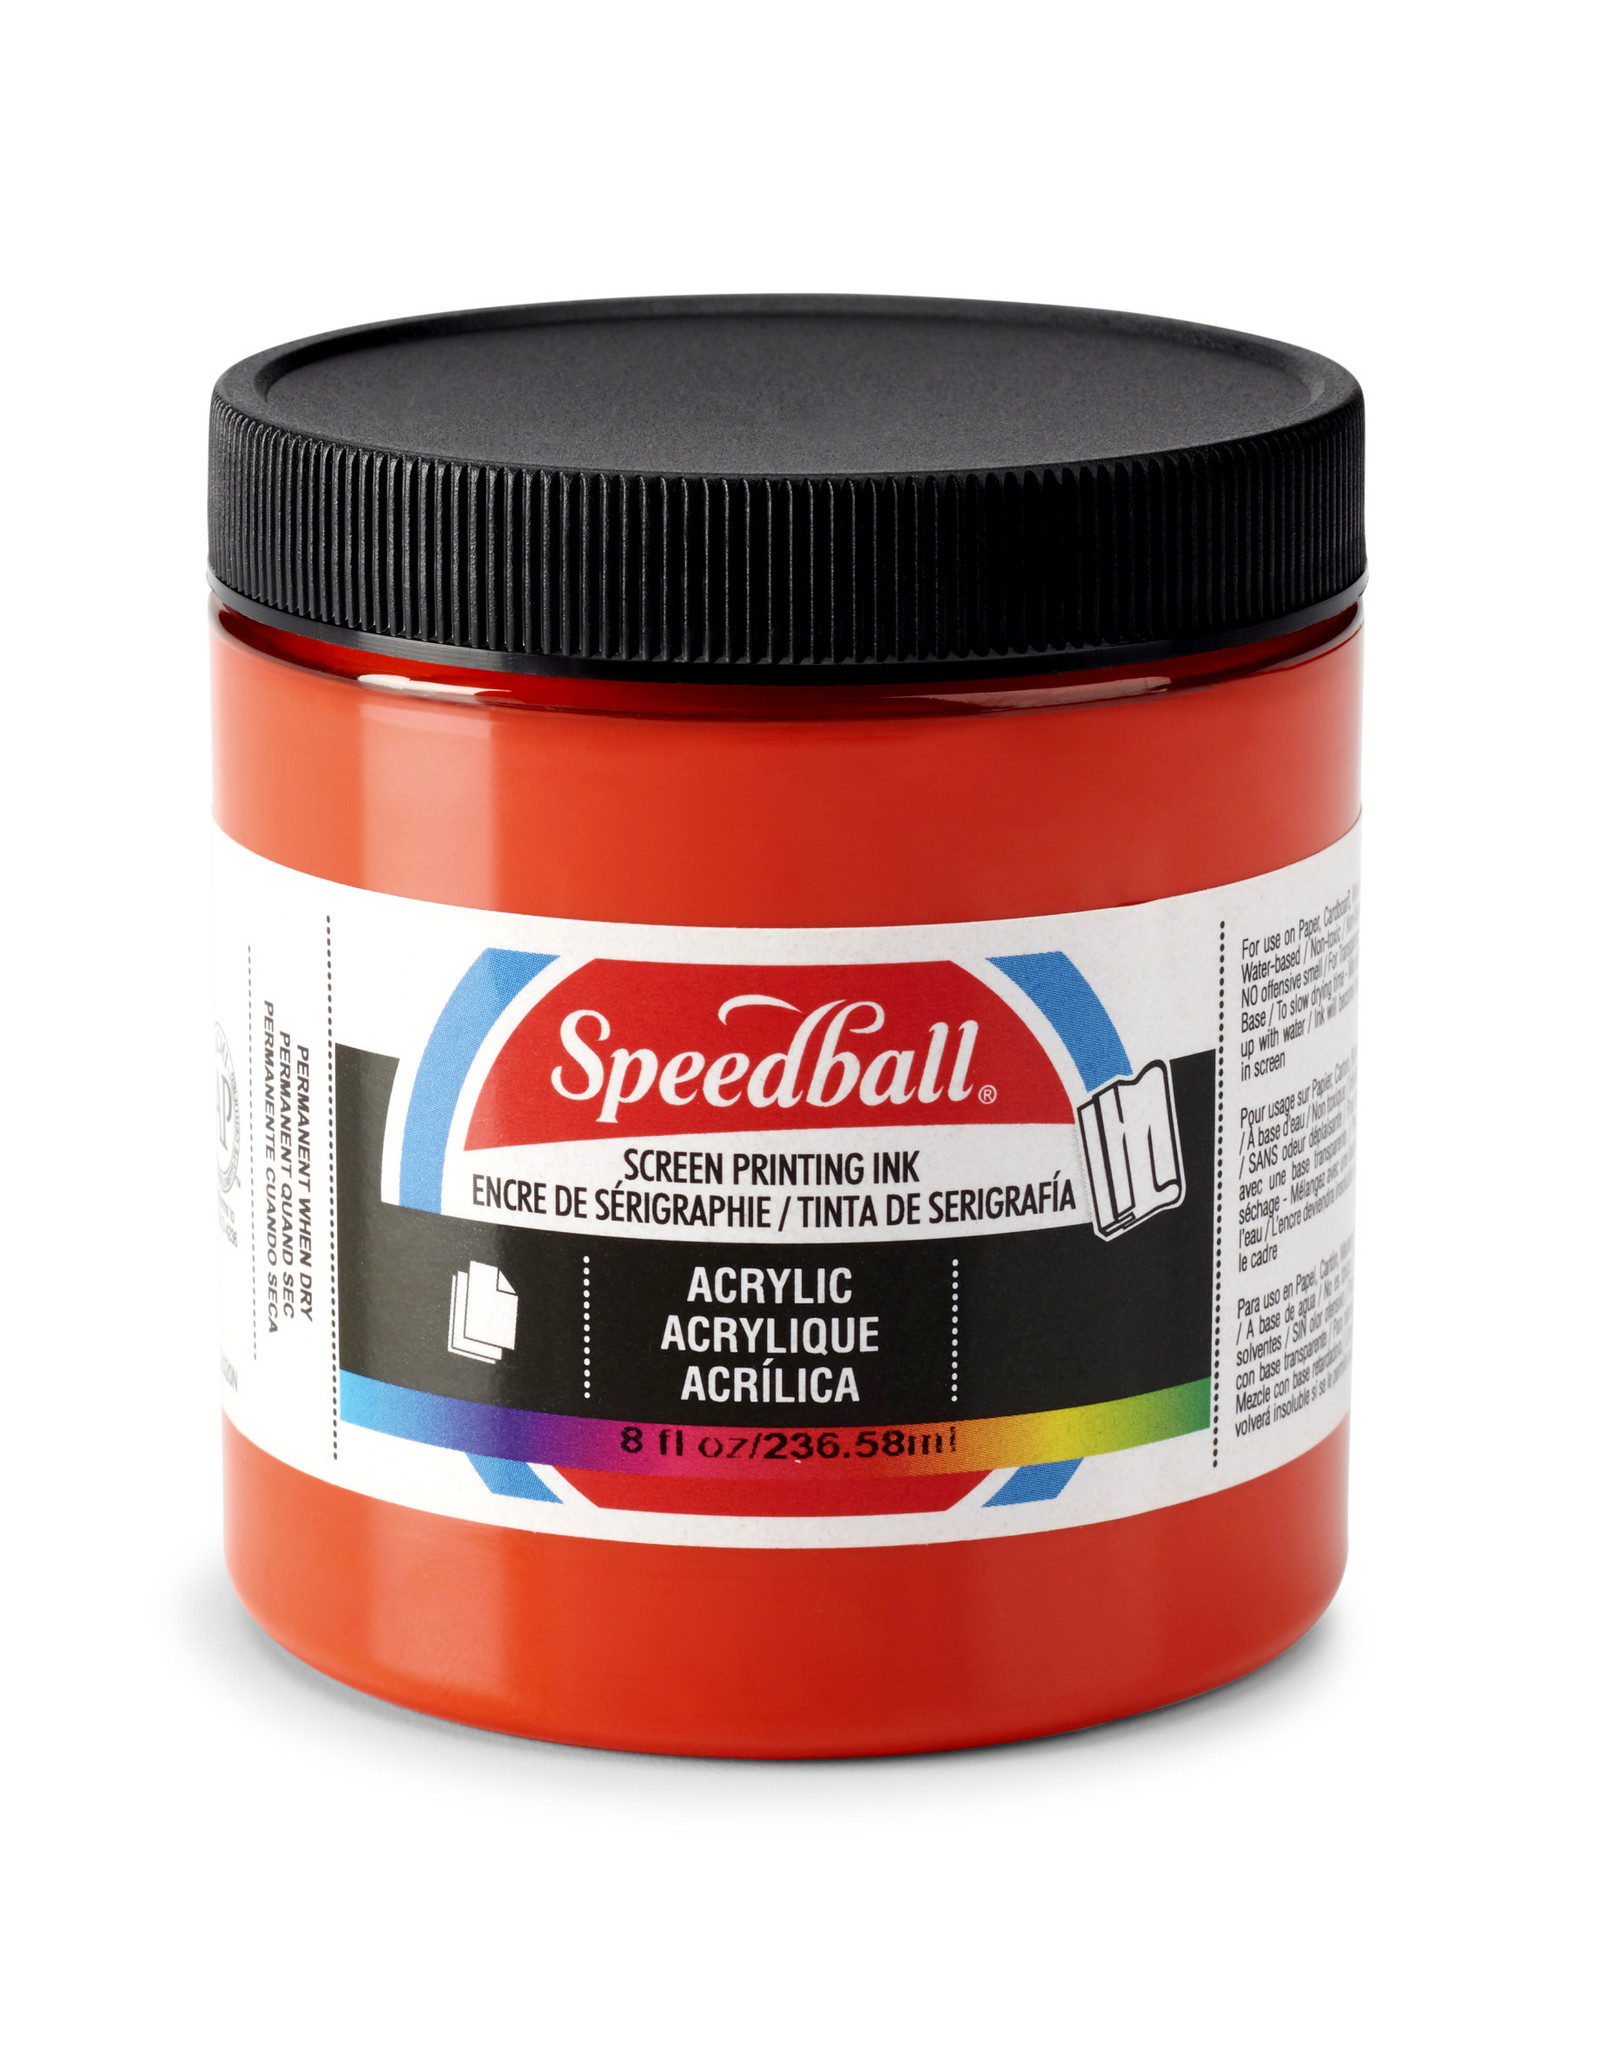 SPEEDBALL ART PRODUCTS Speedball Acrylic Screen Printing Ink, Fire Red, 8oz